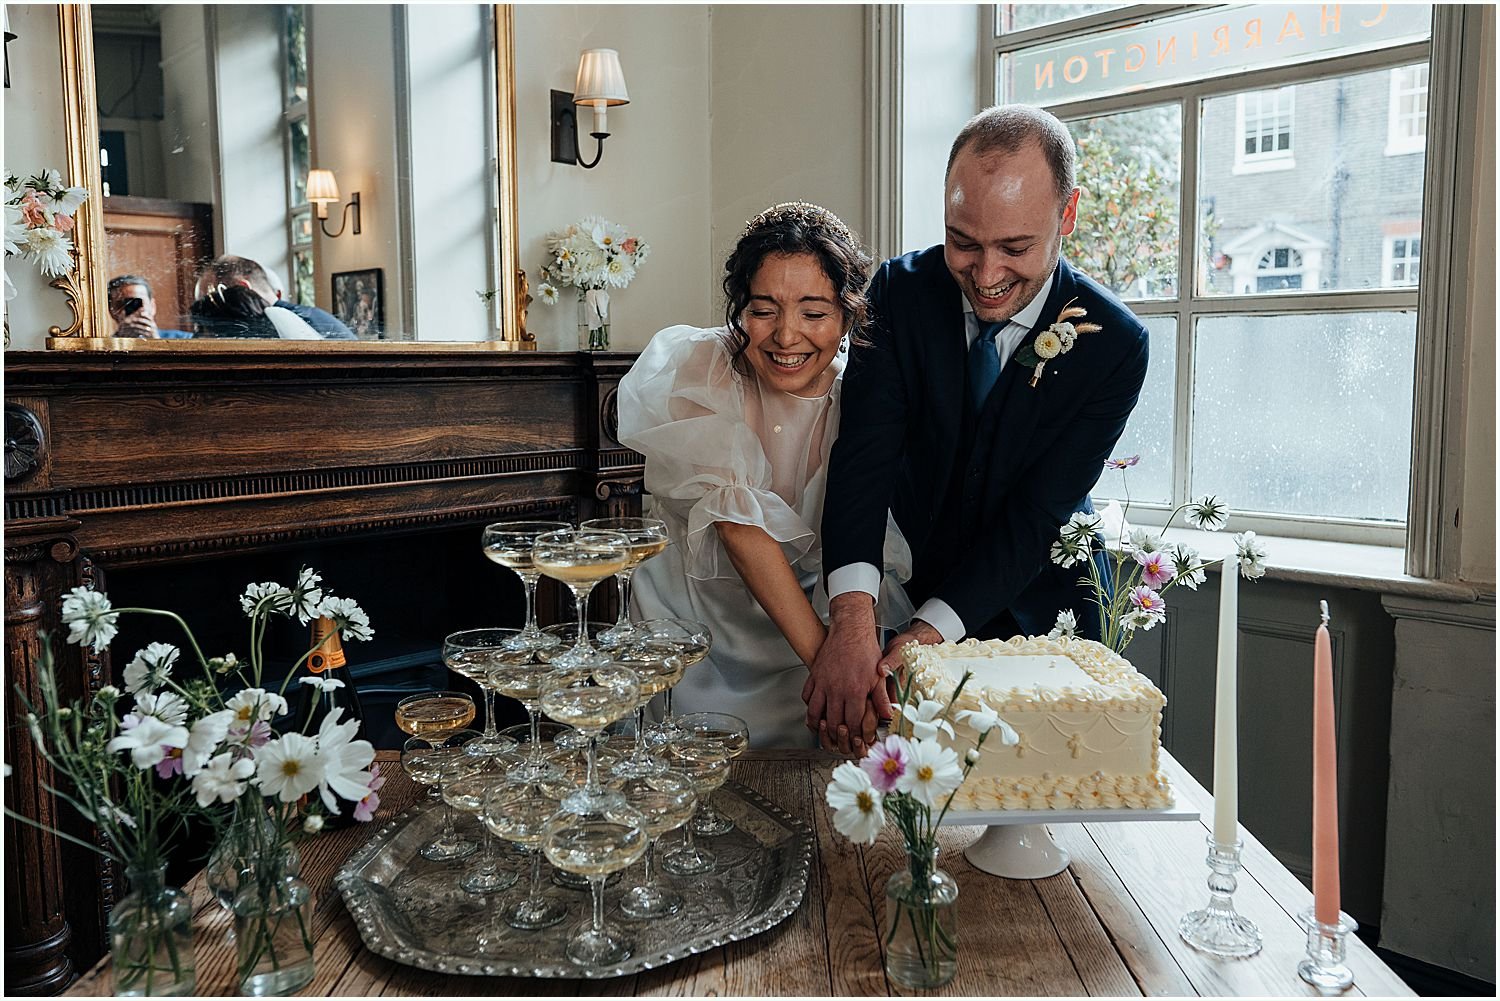 Wedding cake cutting on Julia and Alec's Old Marylebone Town Hall wedding day